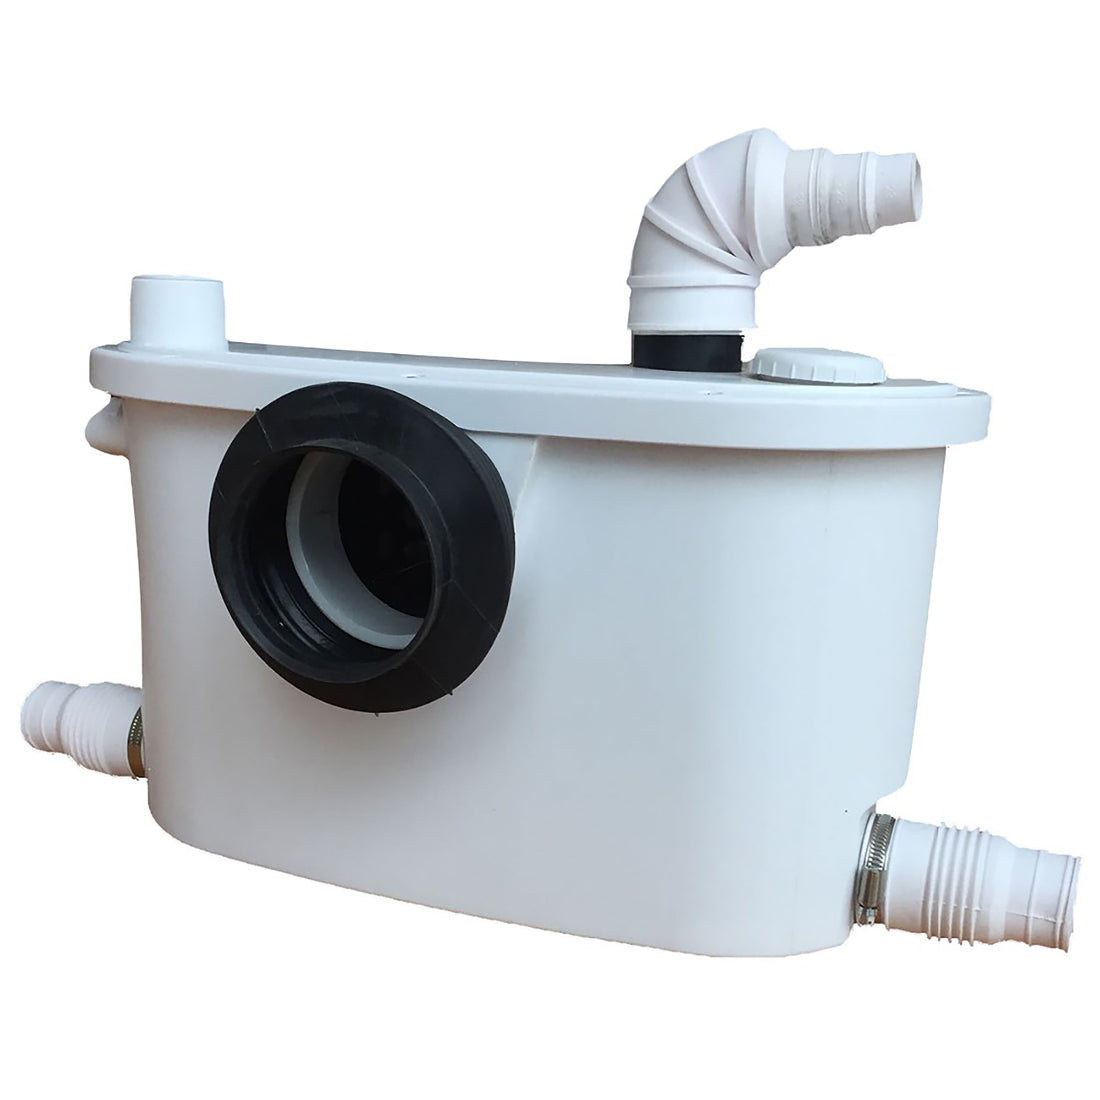 Macerator Pump Sanitary  P441 ® Saniflo Alternative 4 in 1 Sanitary Pump IP54 Rating for Toilet, Sink, Shower 400 Watt